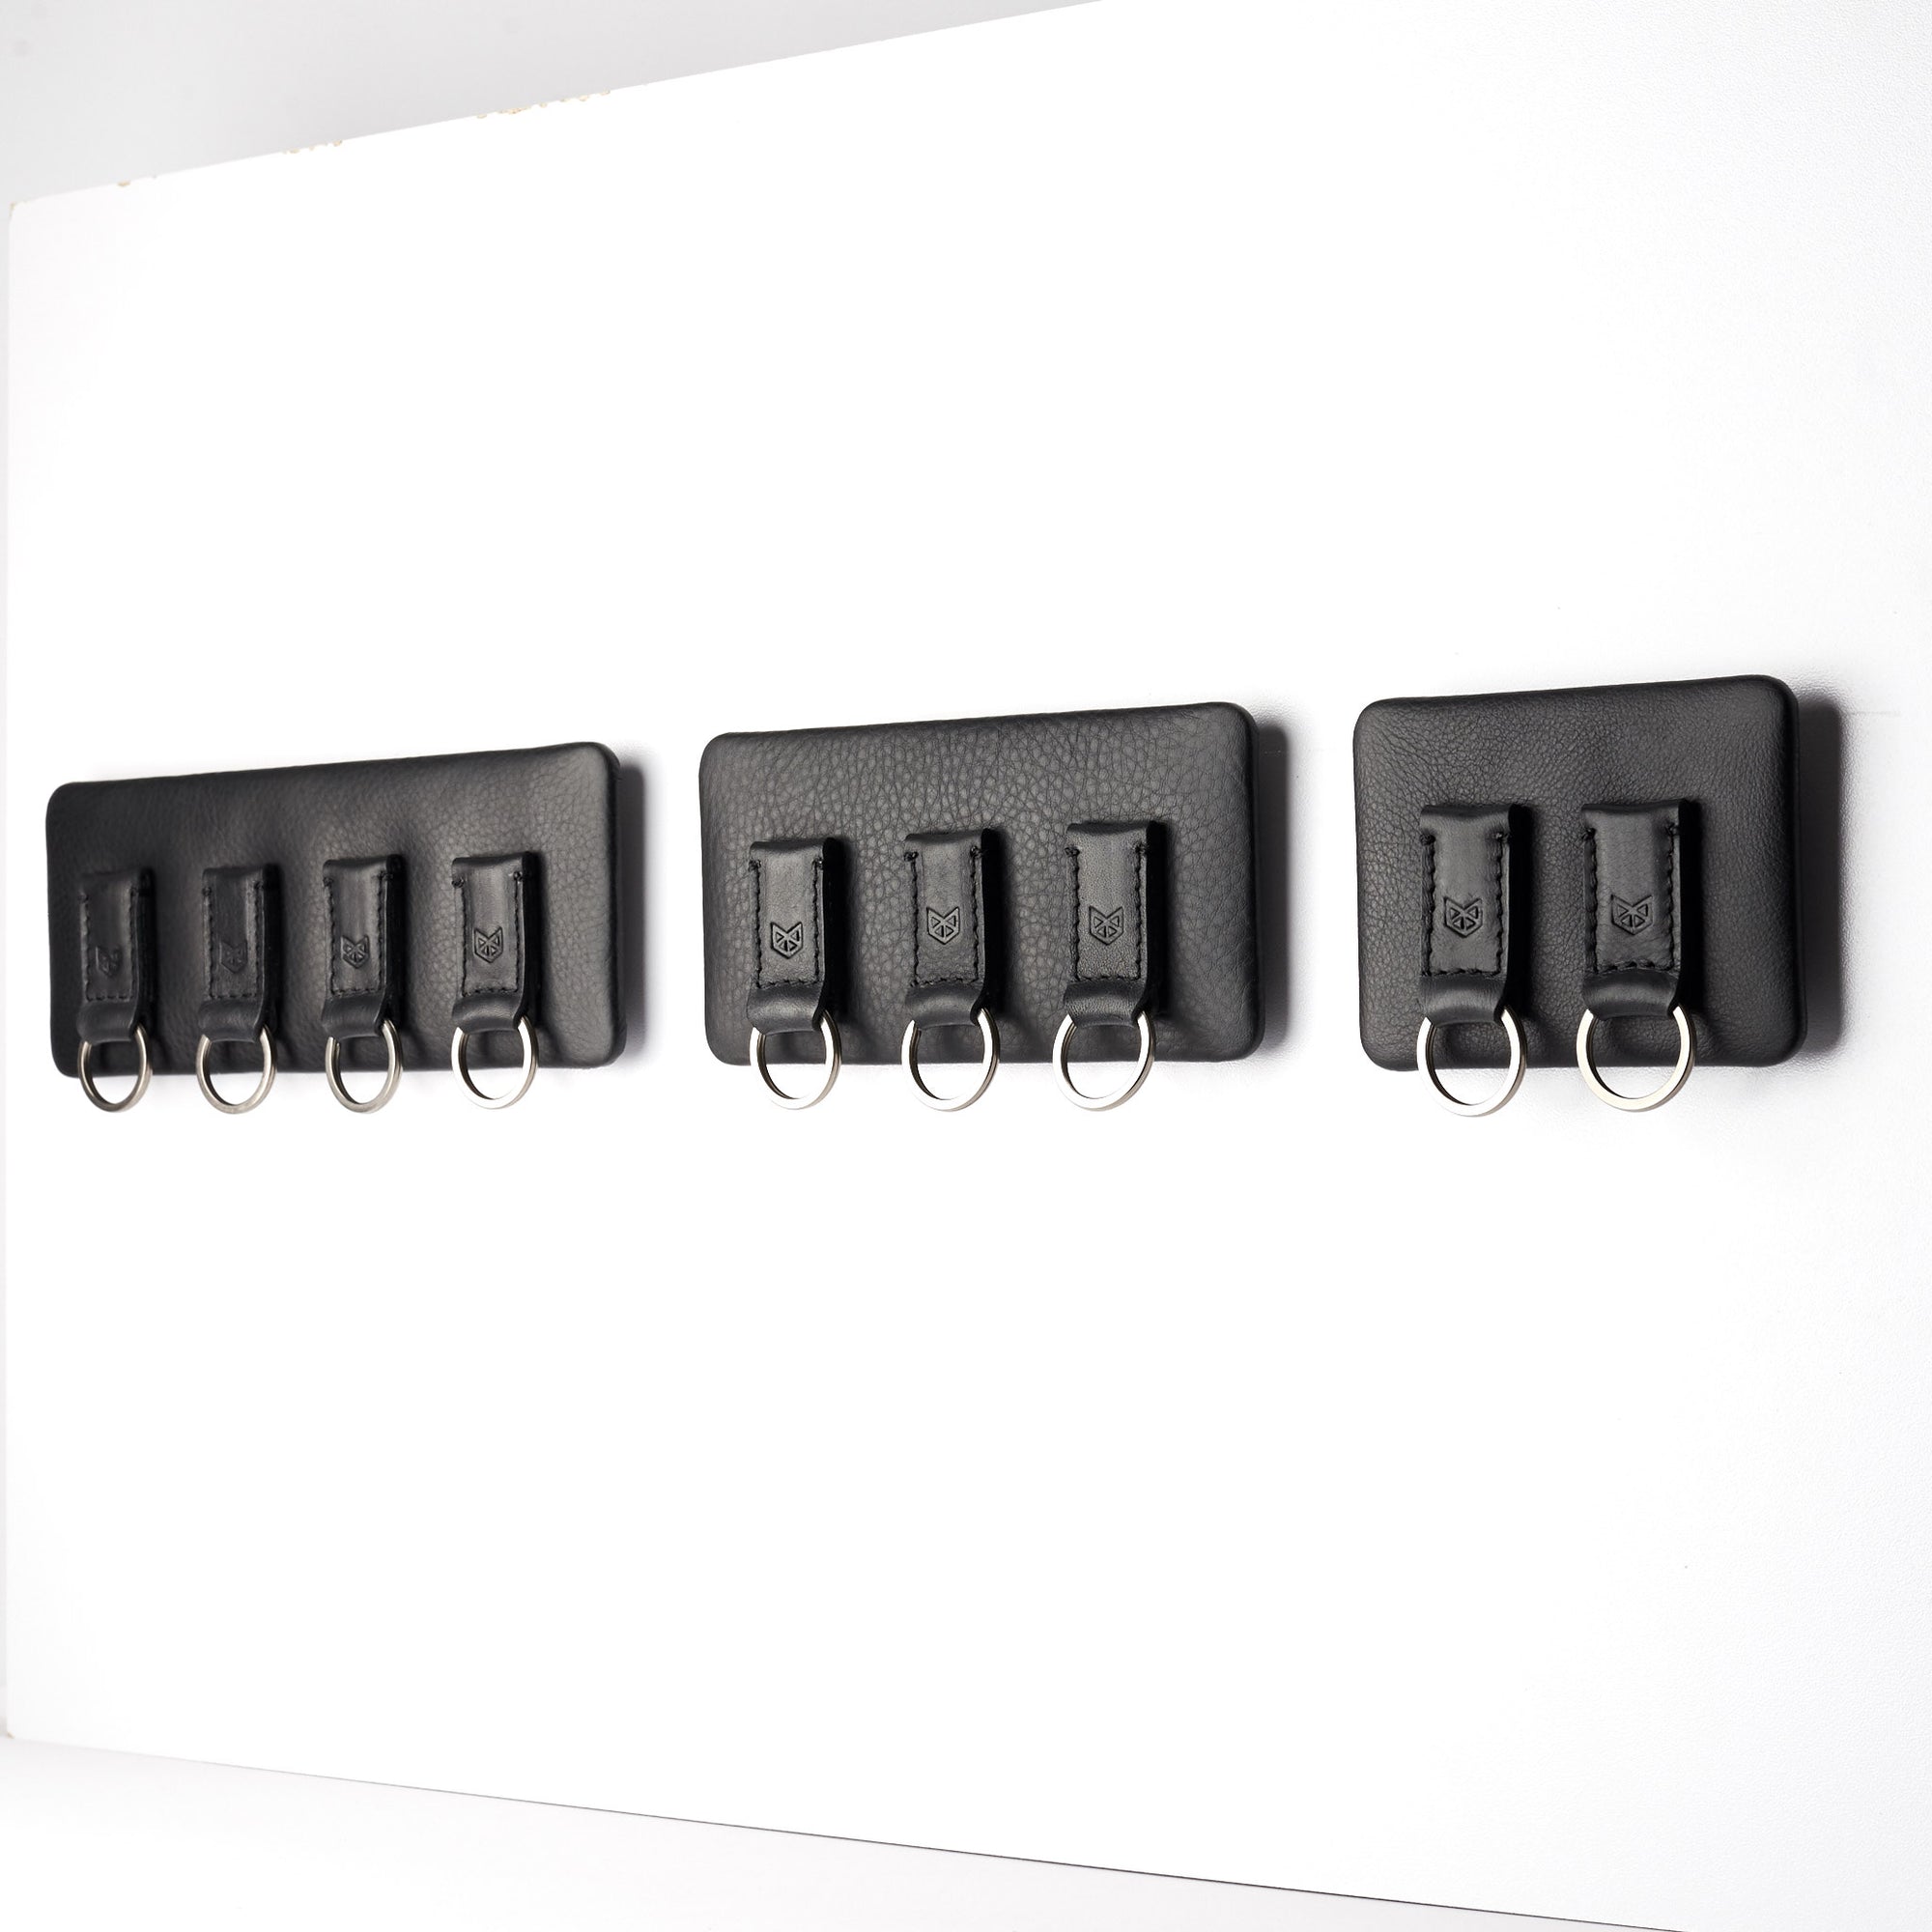 different sizes. Black leather magnetic key holder for wall decor. Entryway organizer decor. Home decoration. Keys organizer